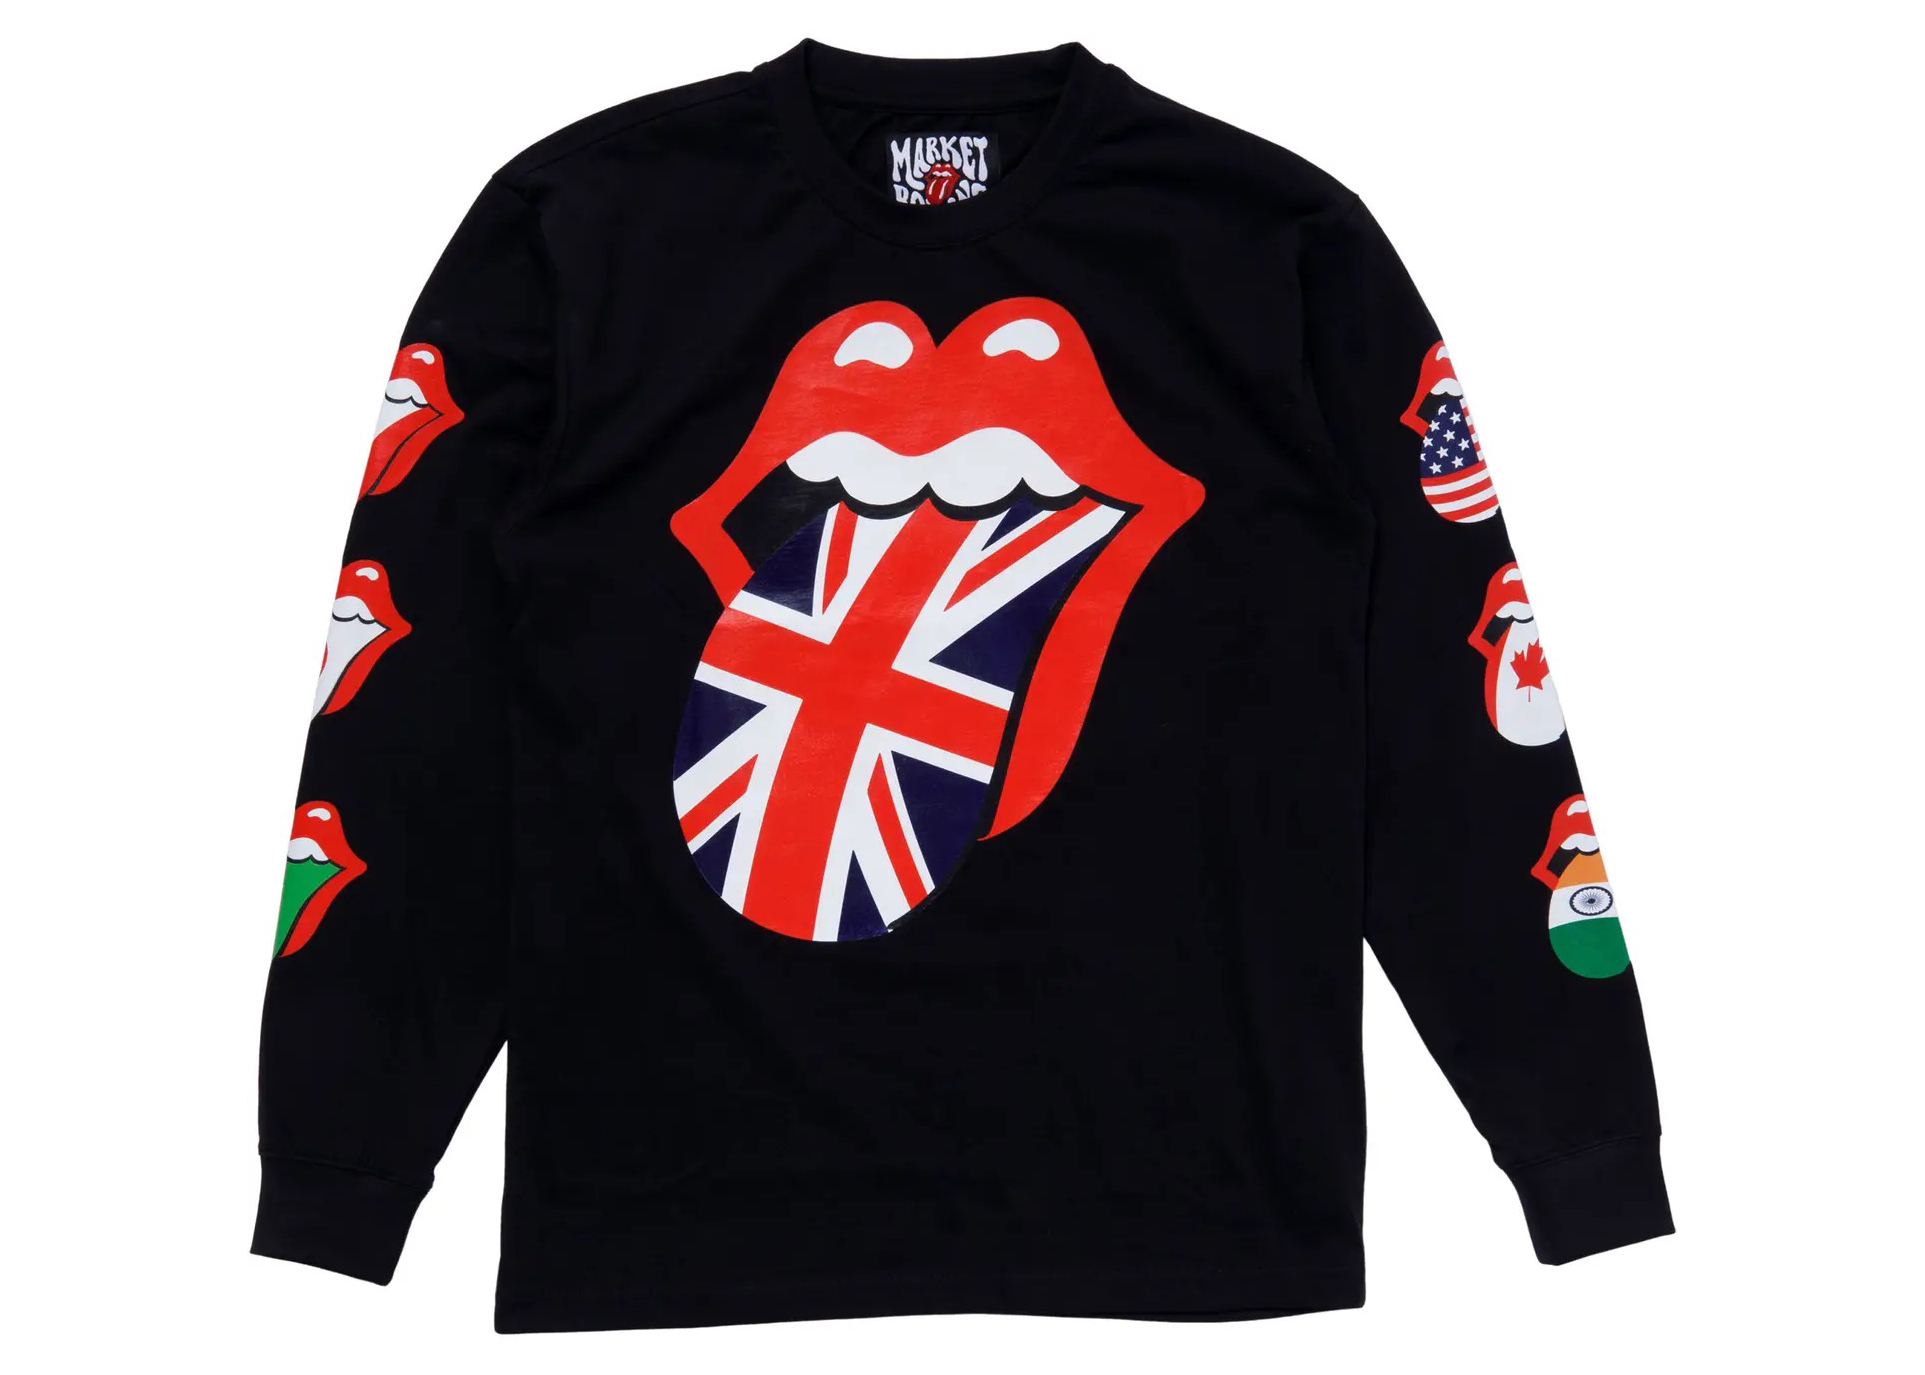 Market MKT Rolling Stones World Flag Cotton L/S T-Shirt Black 